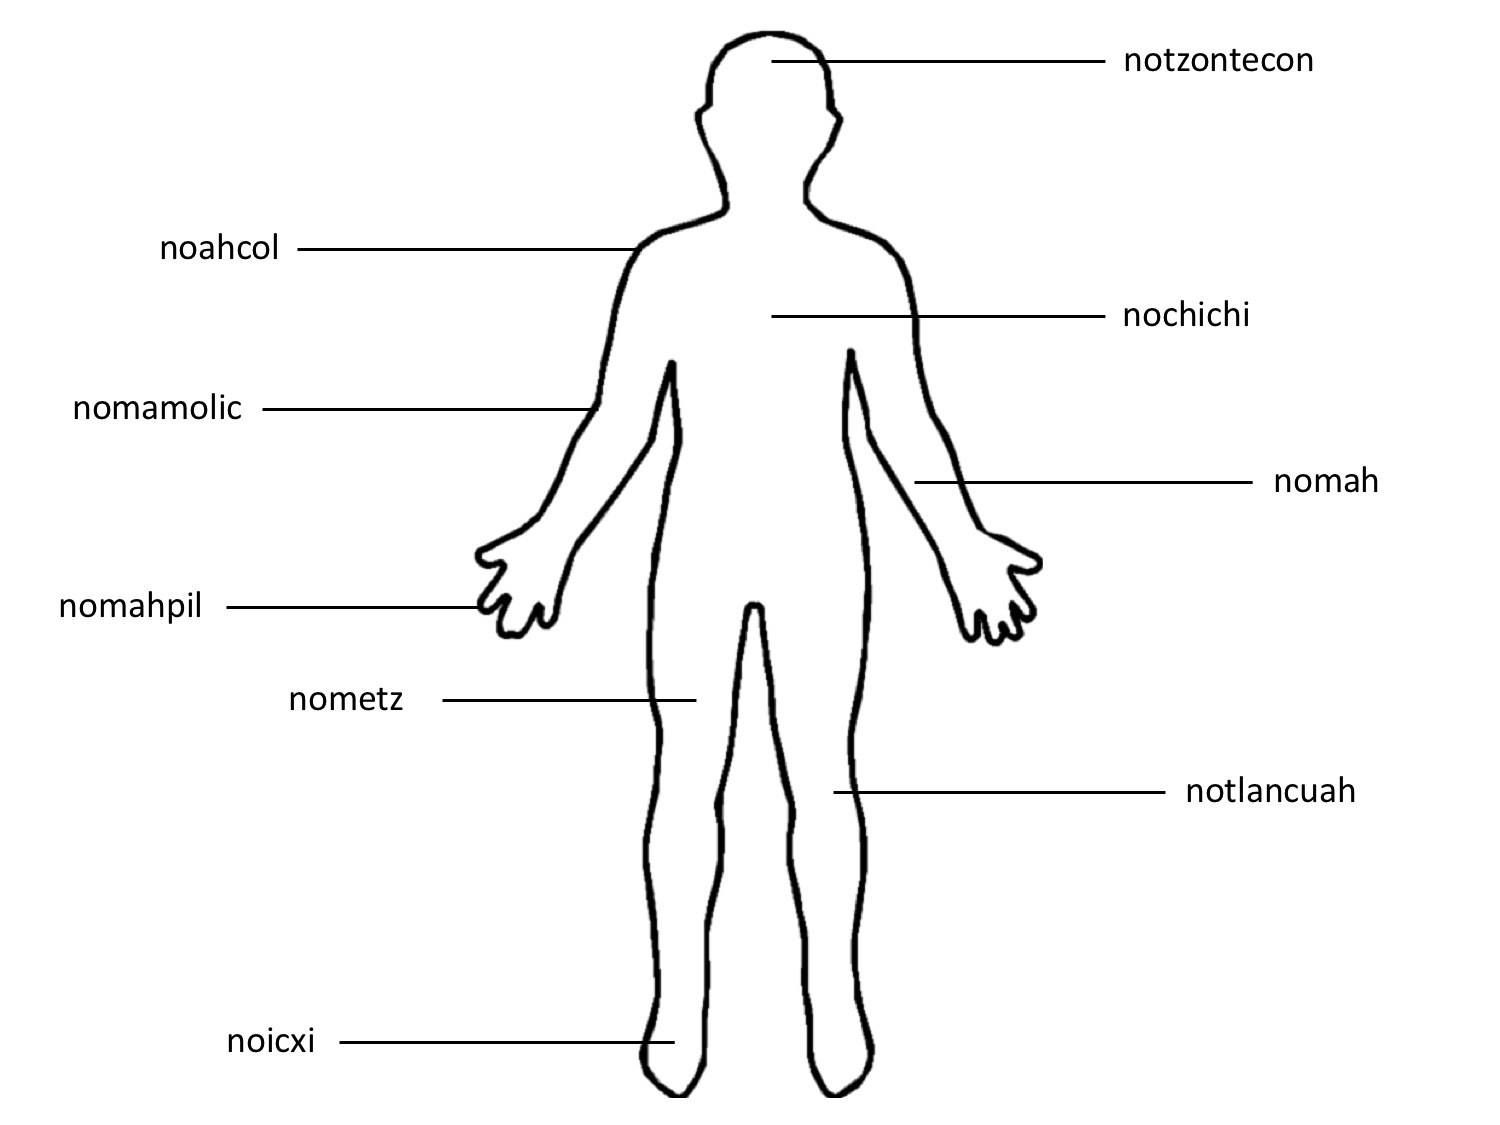 Partes del cuerpo en Nahuatl: Notzontecon, noahcol, nochichi, nomah, nomamolic, nomahpil, nometz, noicxi.